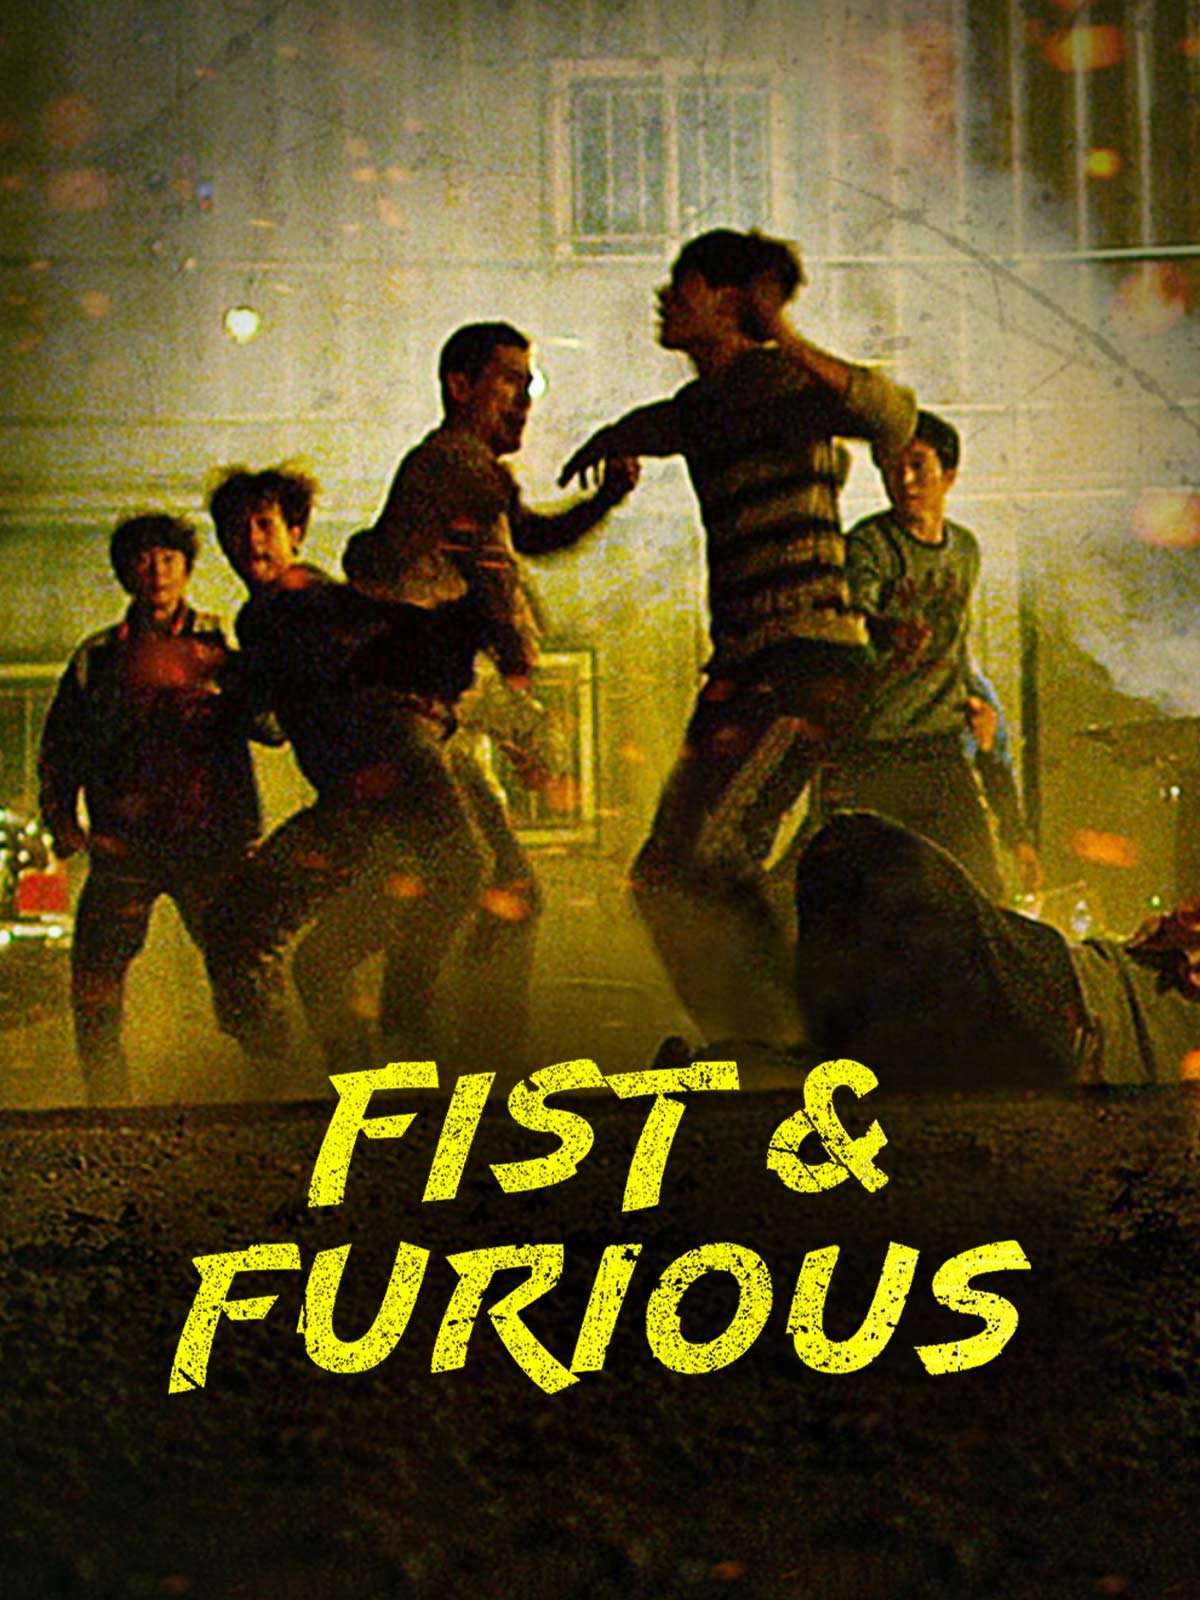 Poster Phim Hồ Sơ Bạo Lực (Fist and Furious)